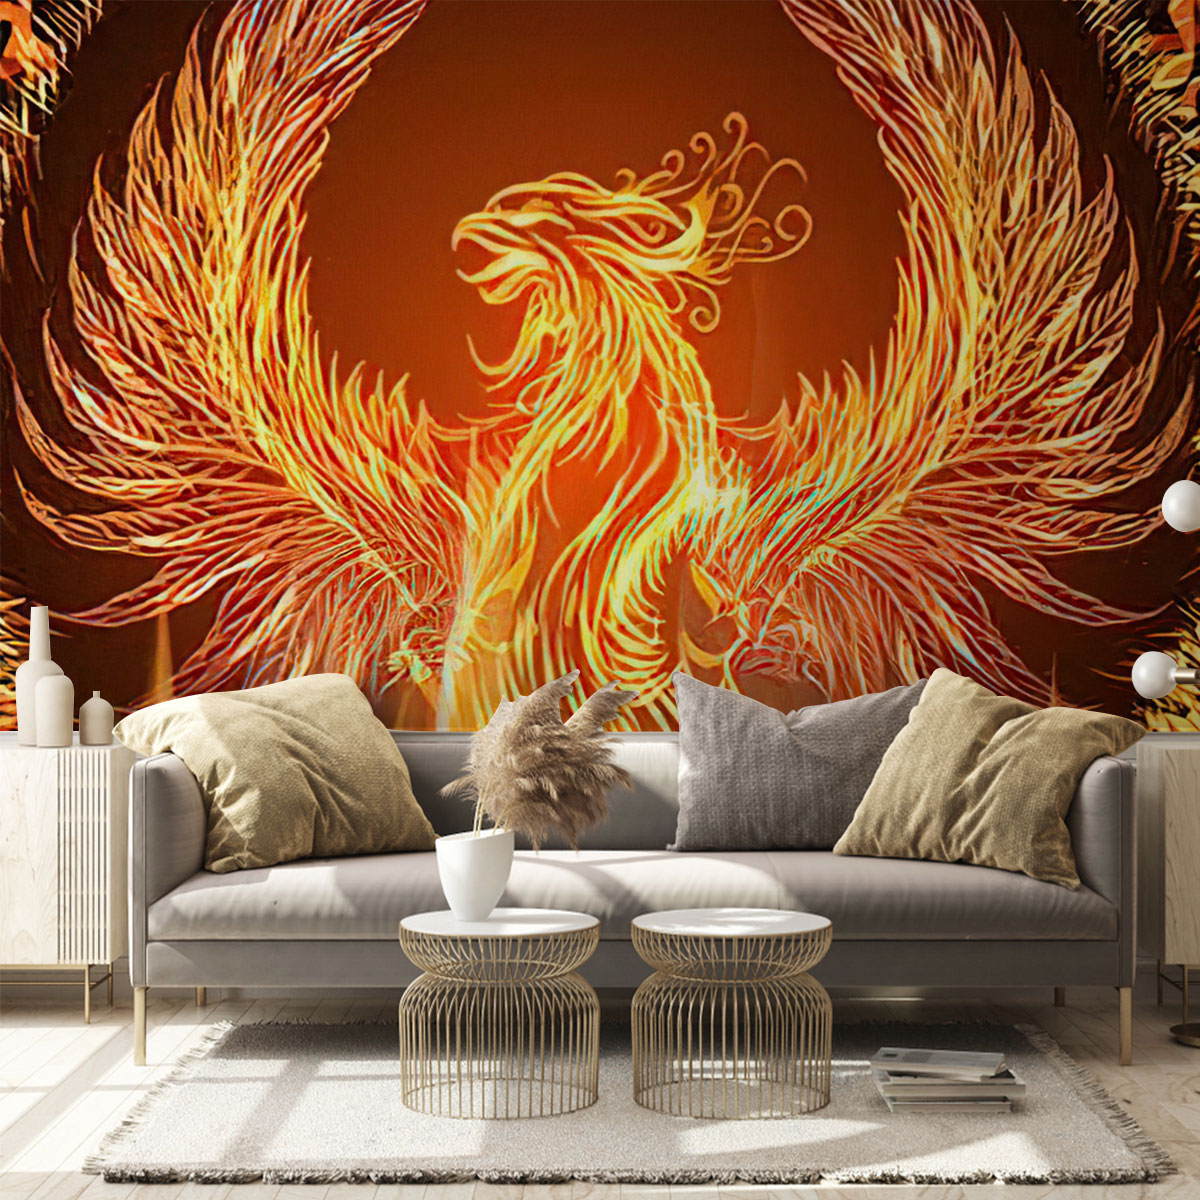 Fire Phoenix Wall Mural_1_2.1